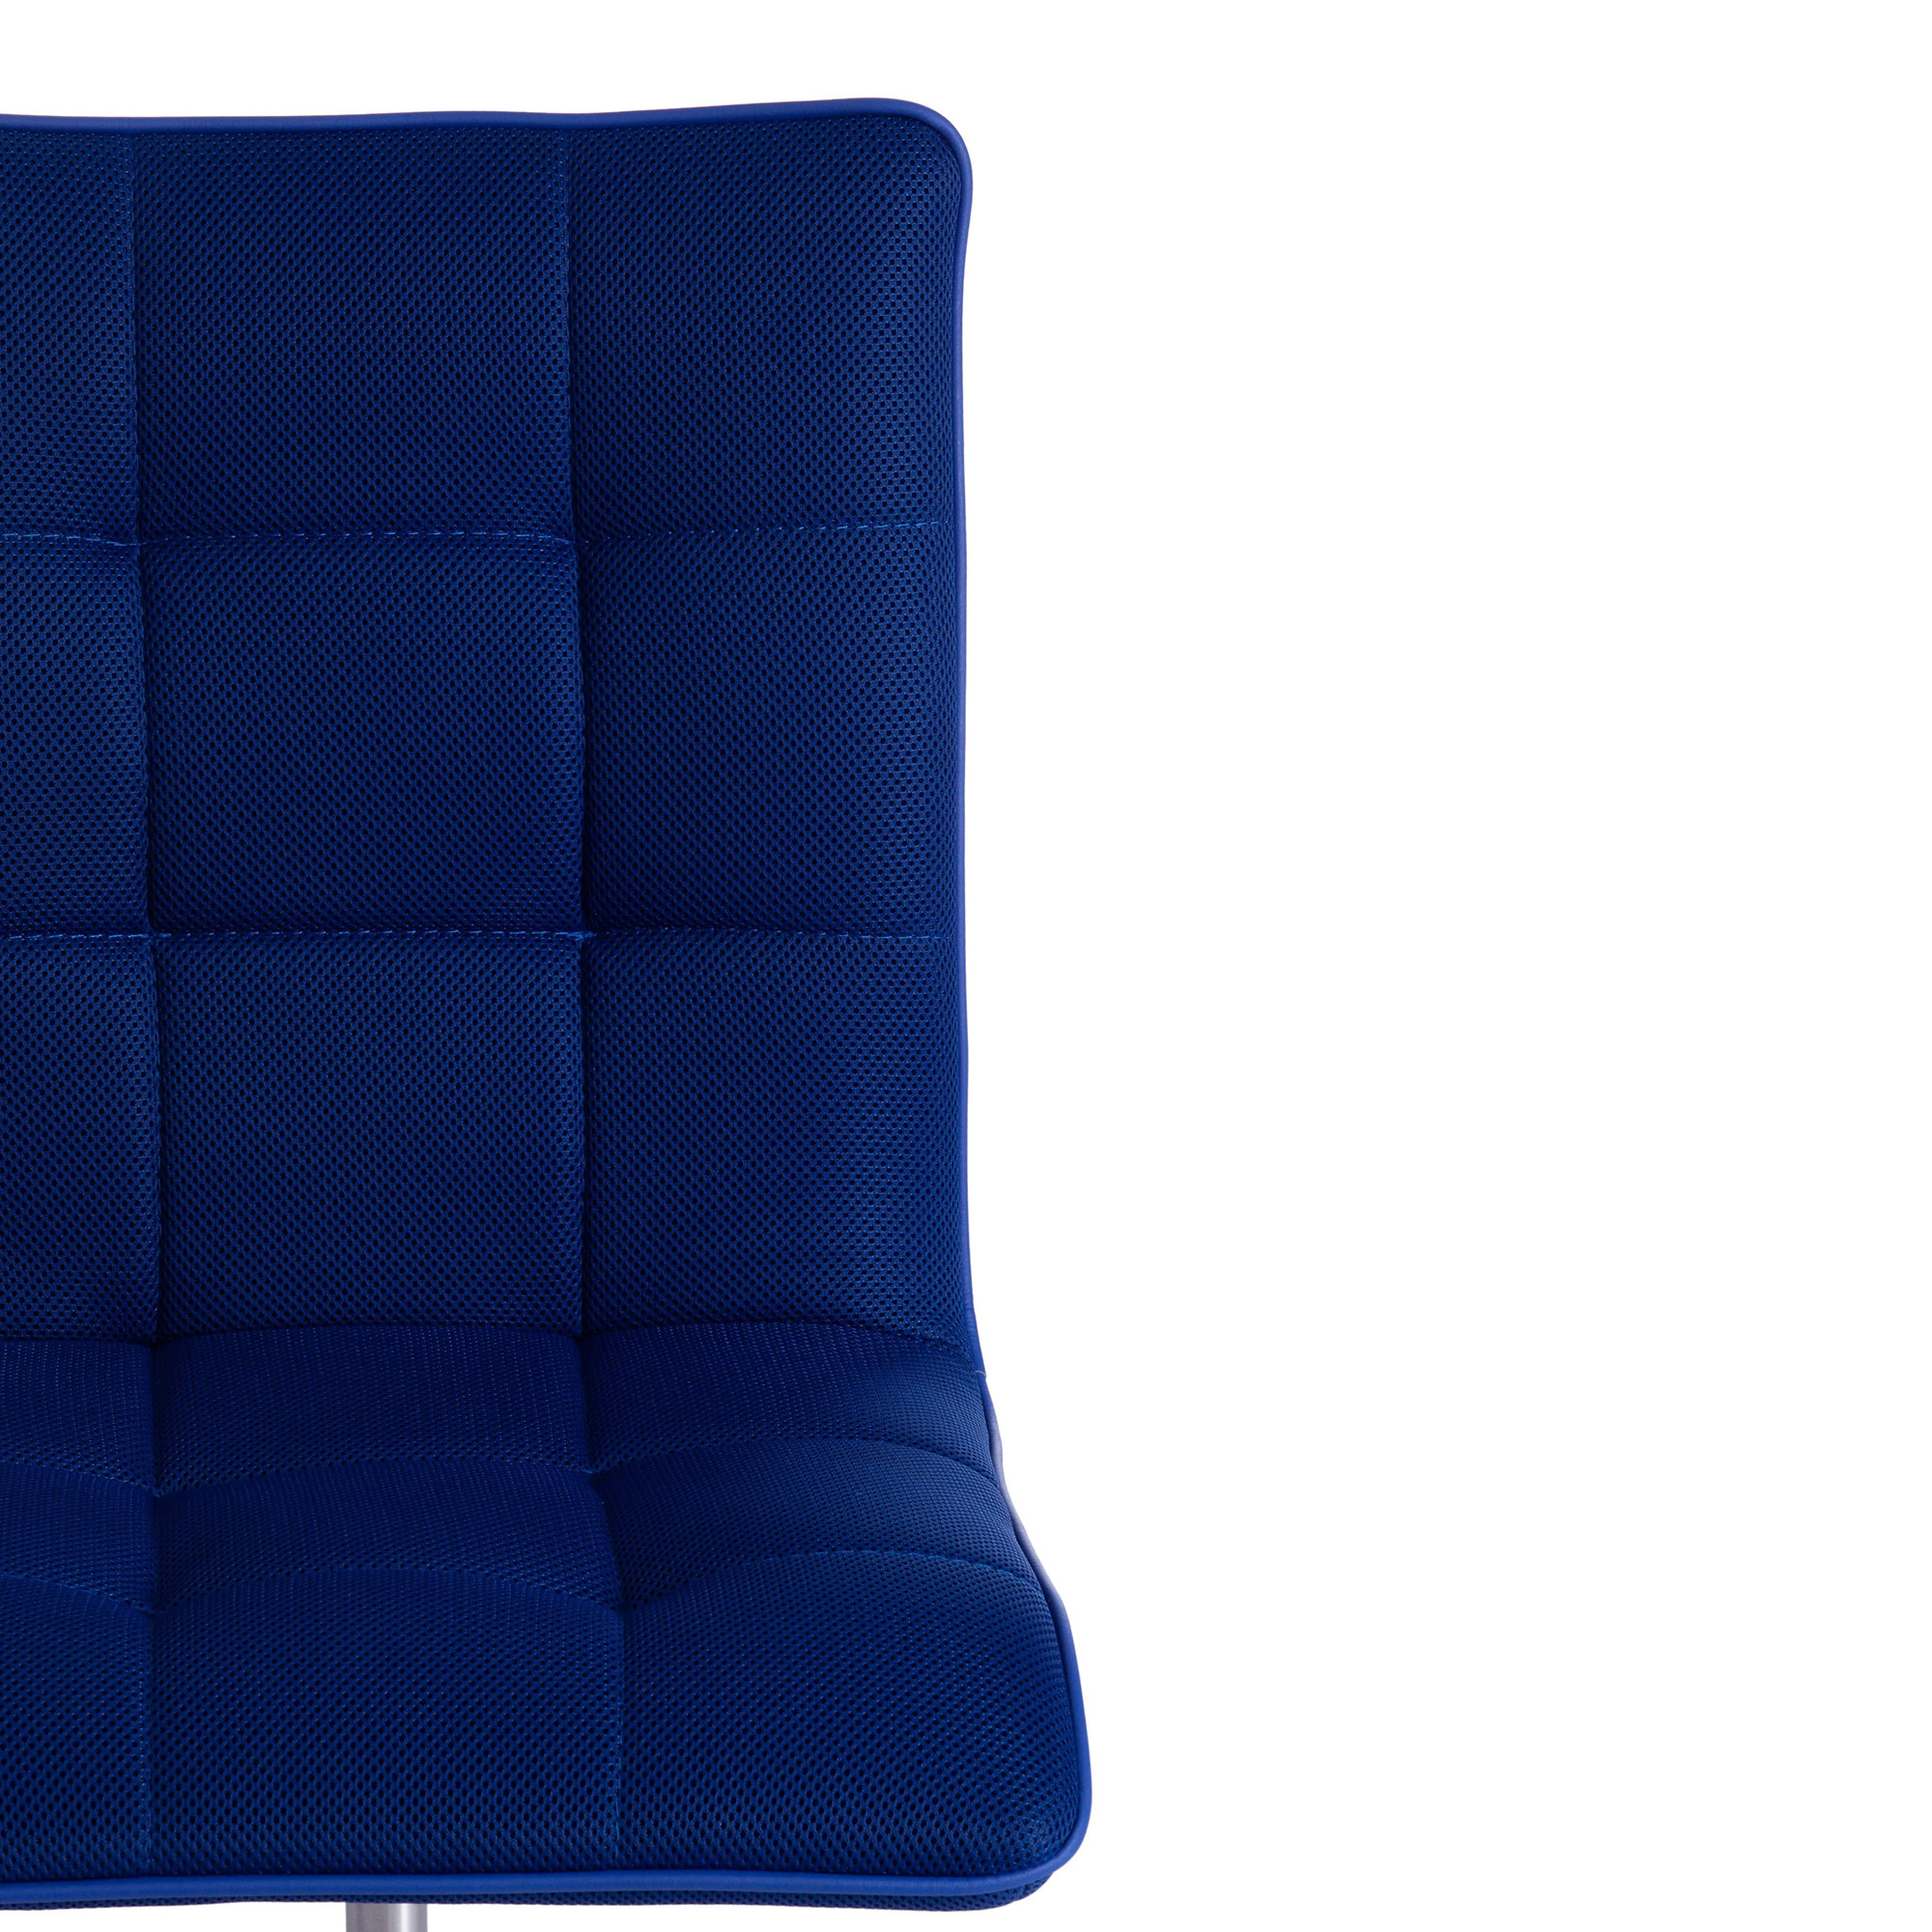 Компьютерное кресло TC Zero синее 45х40х96 см (19275), цвет серебряный - фото 6